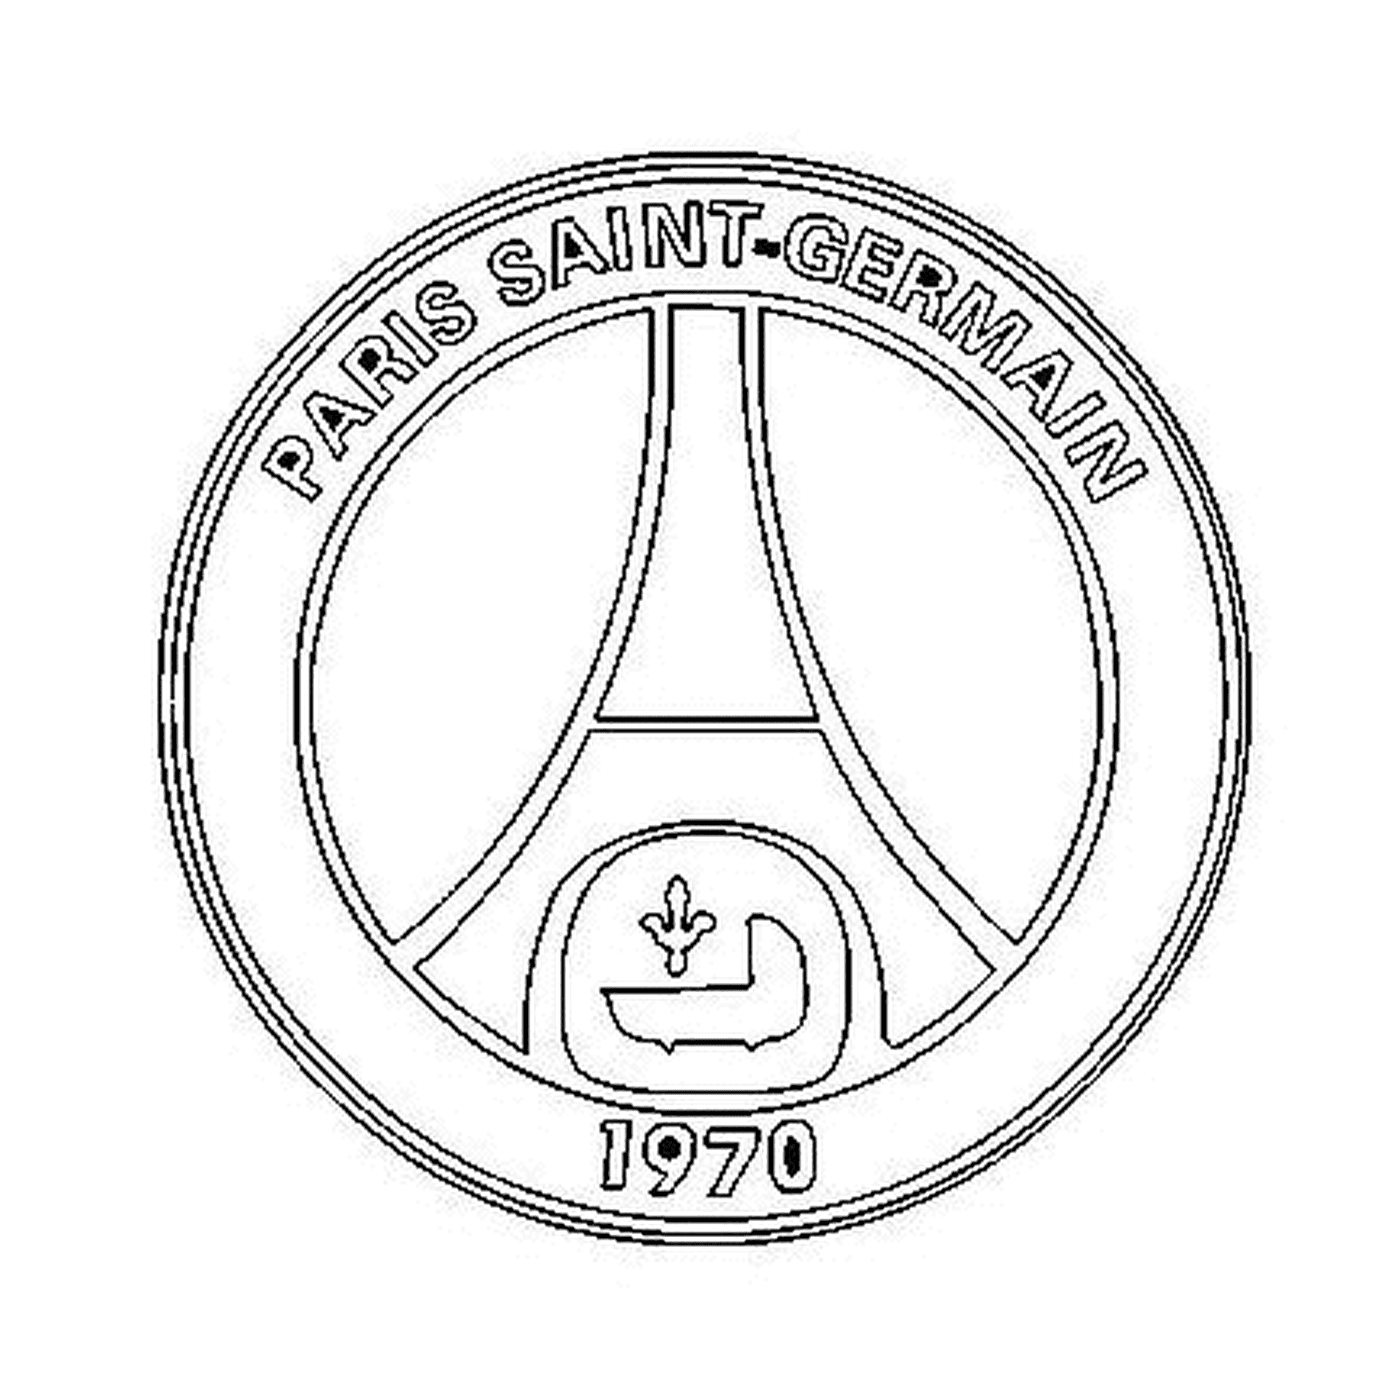  Logo di Parigi Saint-Germain 